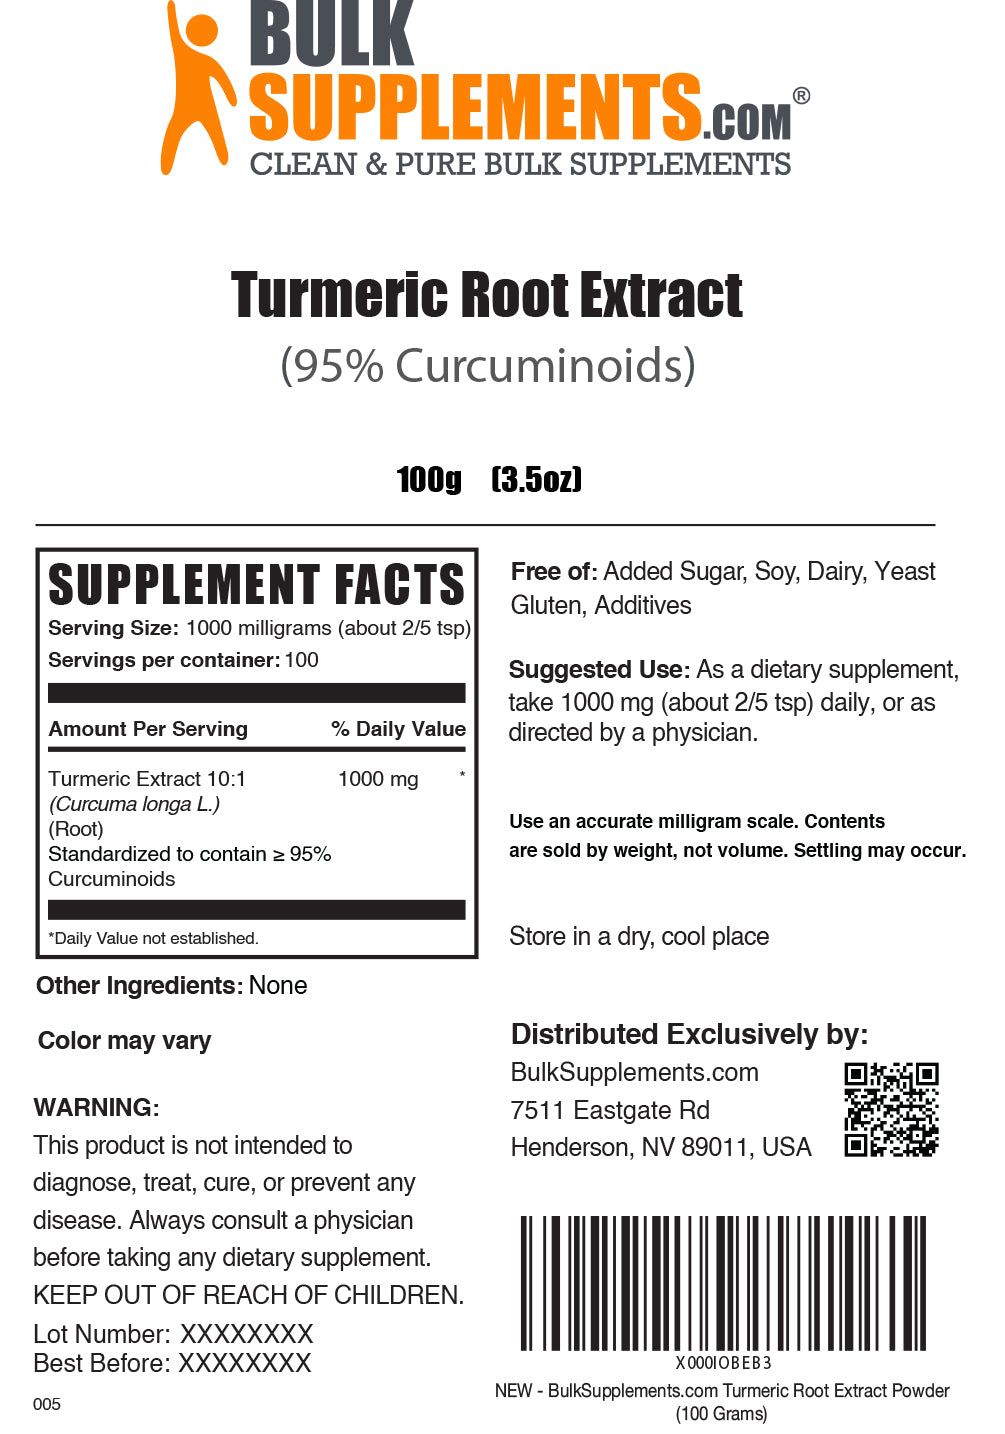 Turmeric Extract Powder 100g Label